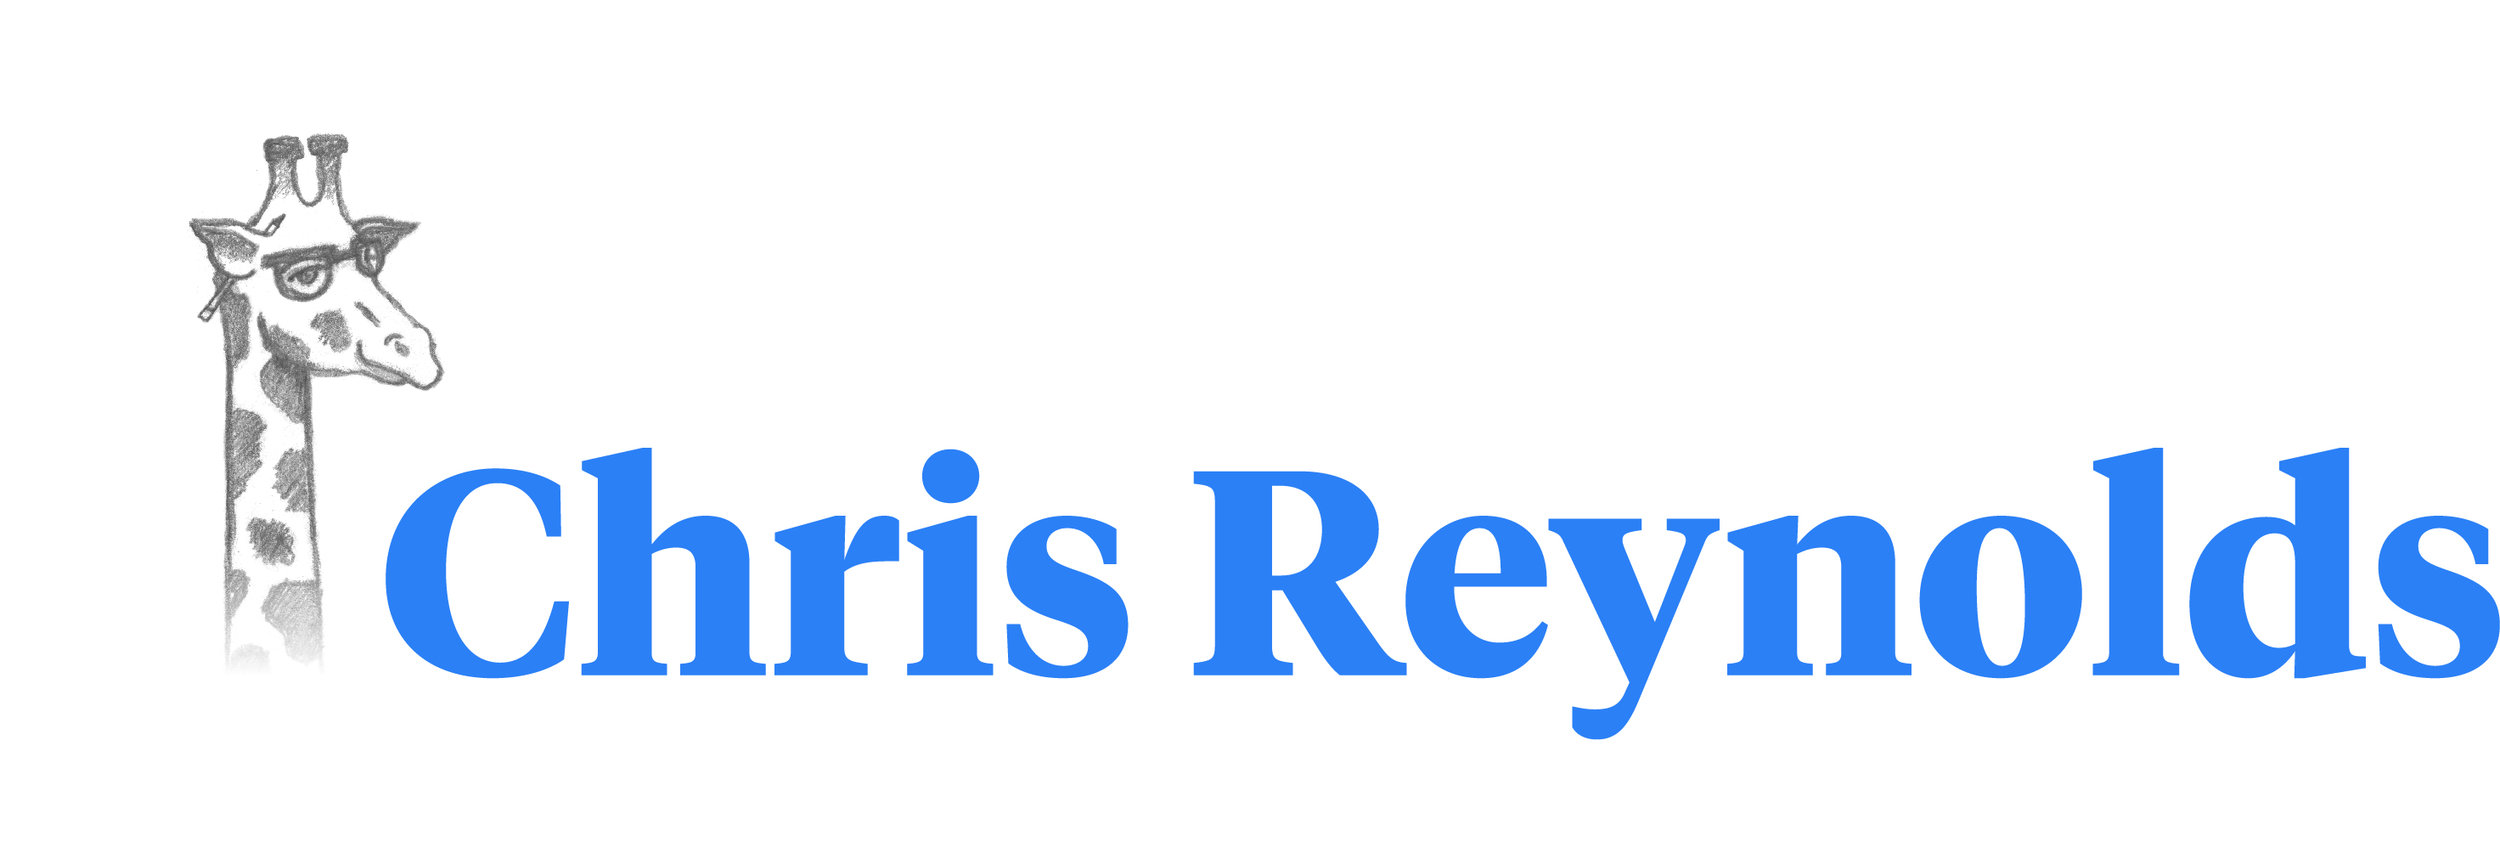 Chris Reynolds Portfolio